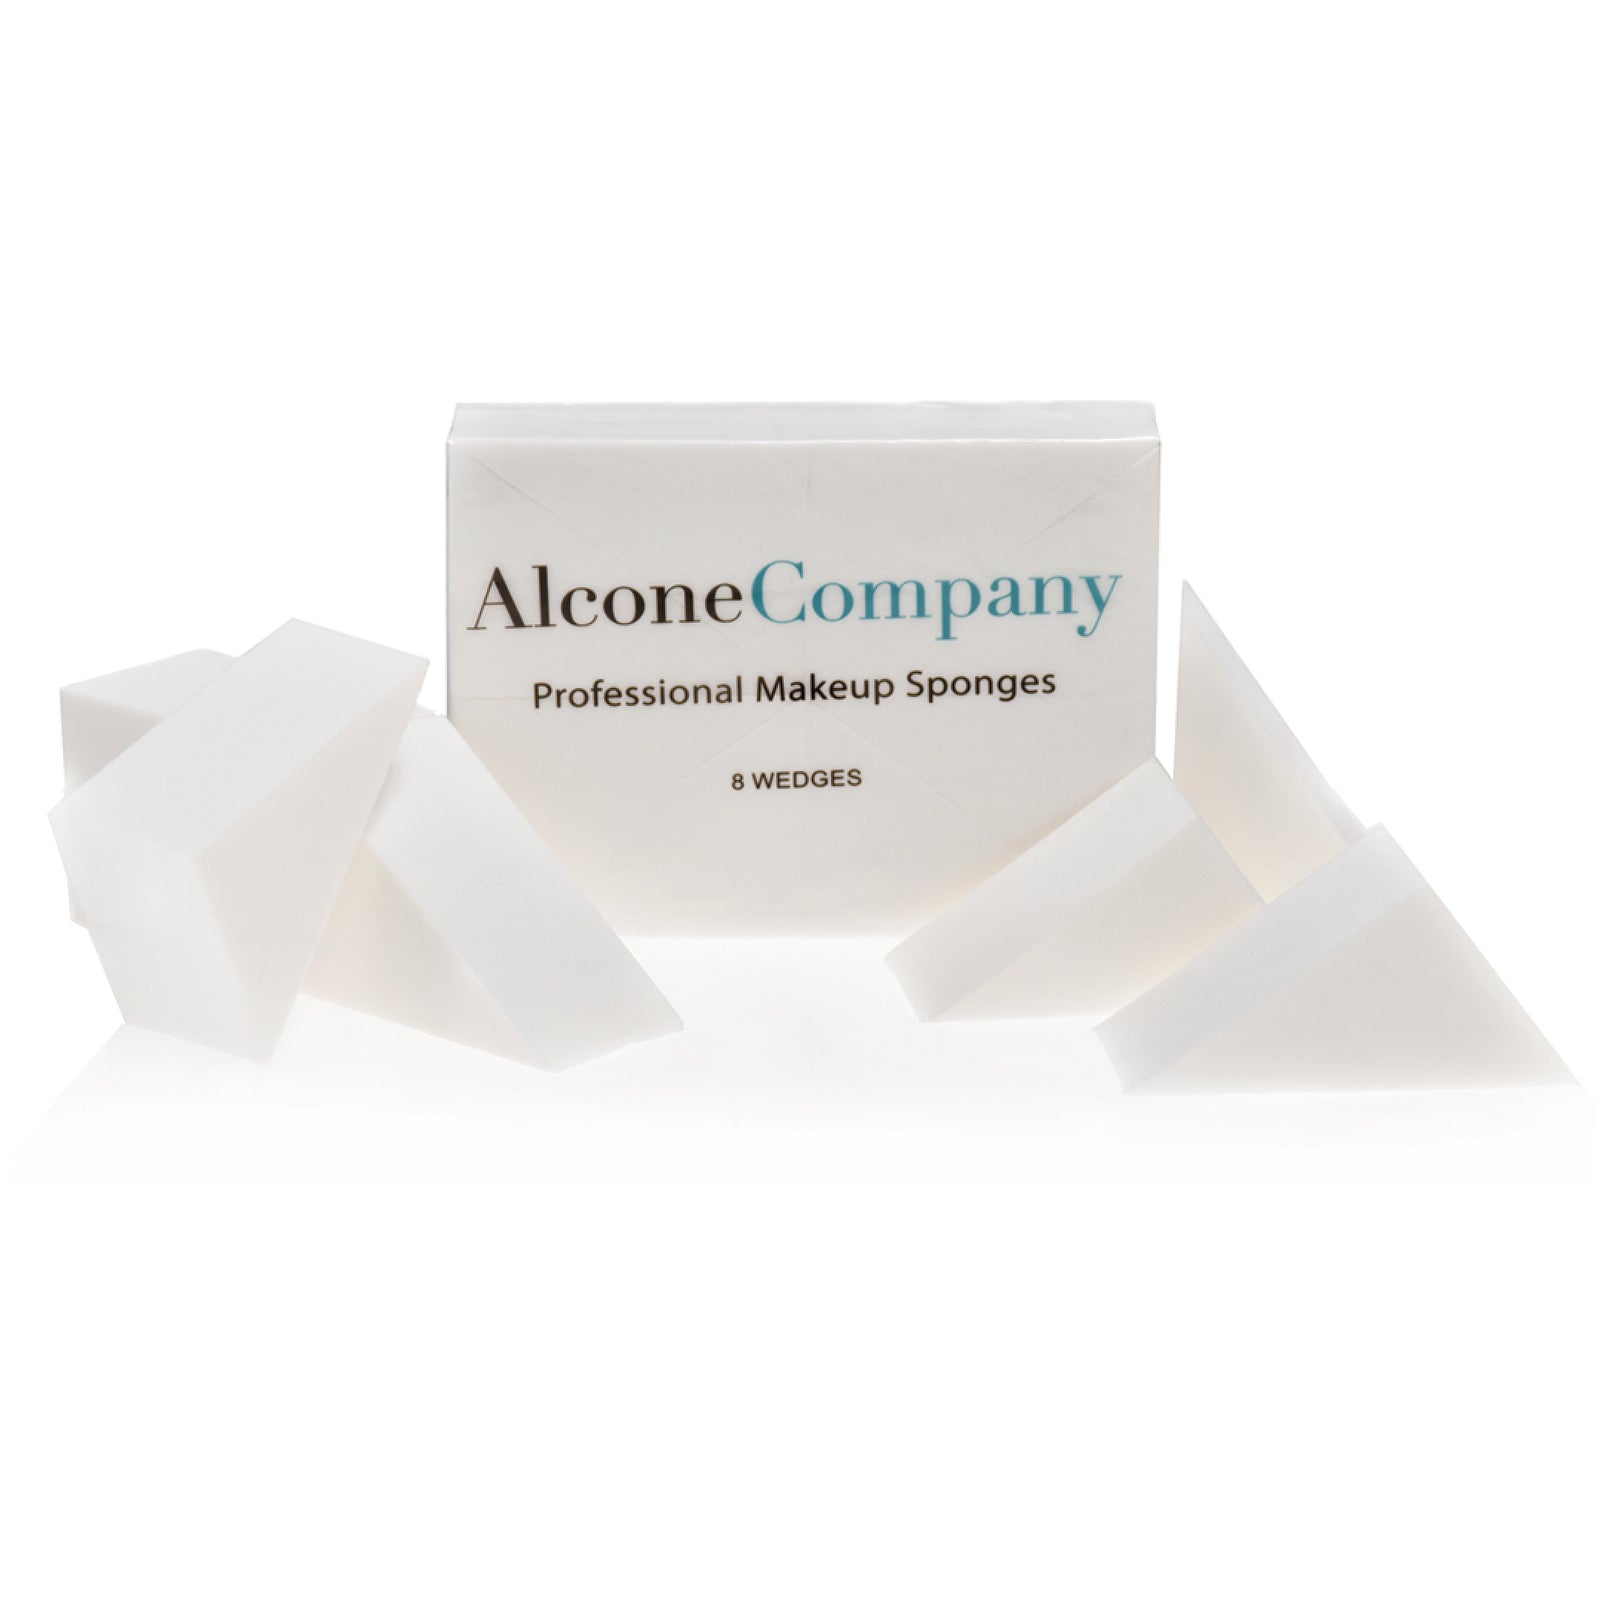 Alcone Company Professional Makeup Sponges, One Block